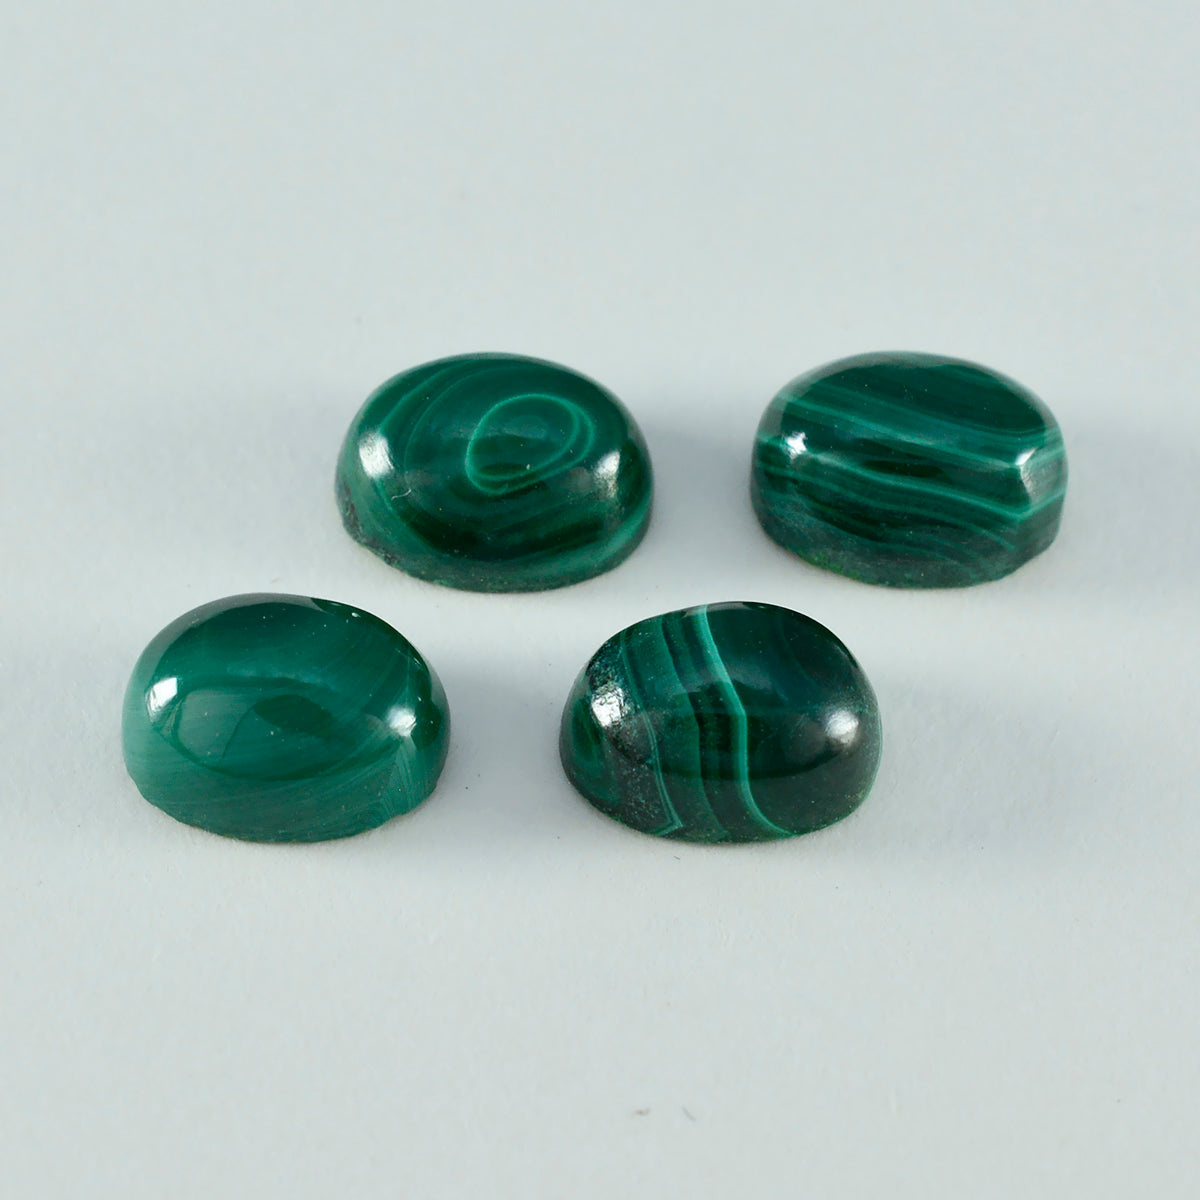 riyogems 1 st grön malakit cabochon 4x6 mm oval form söt kvalitet pärla